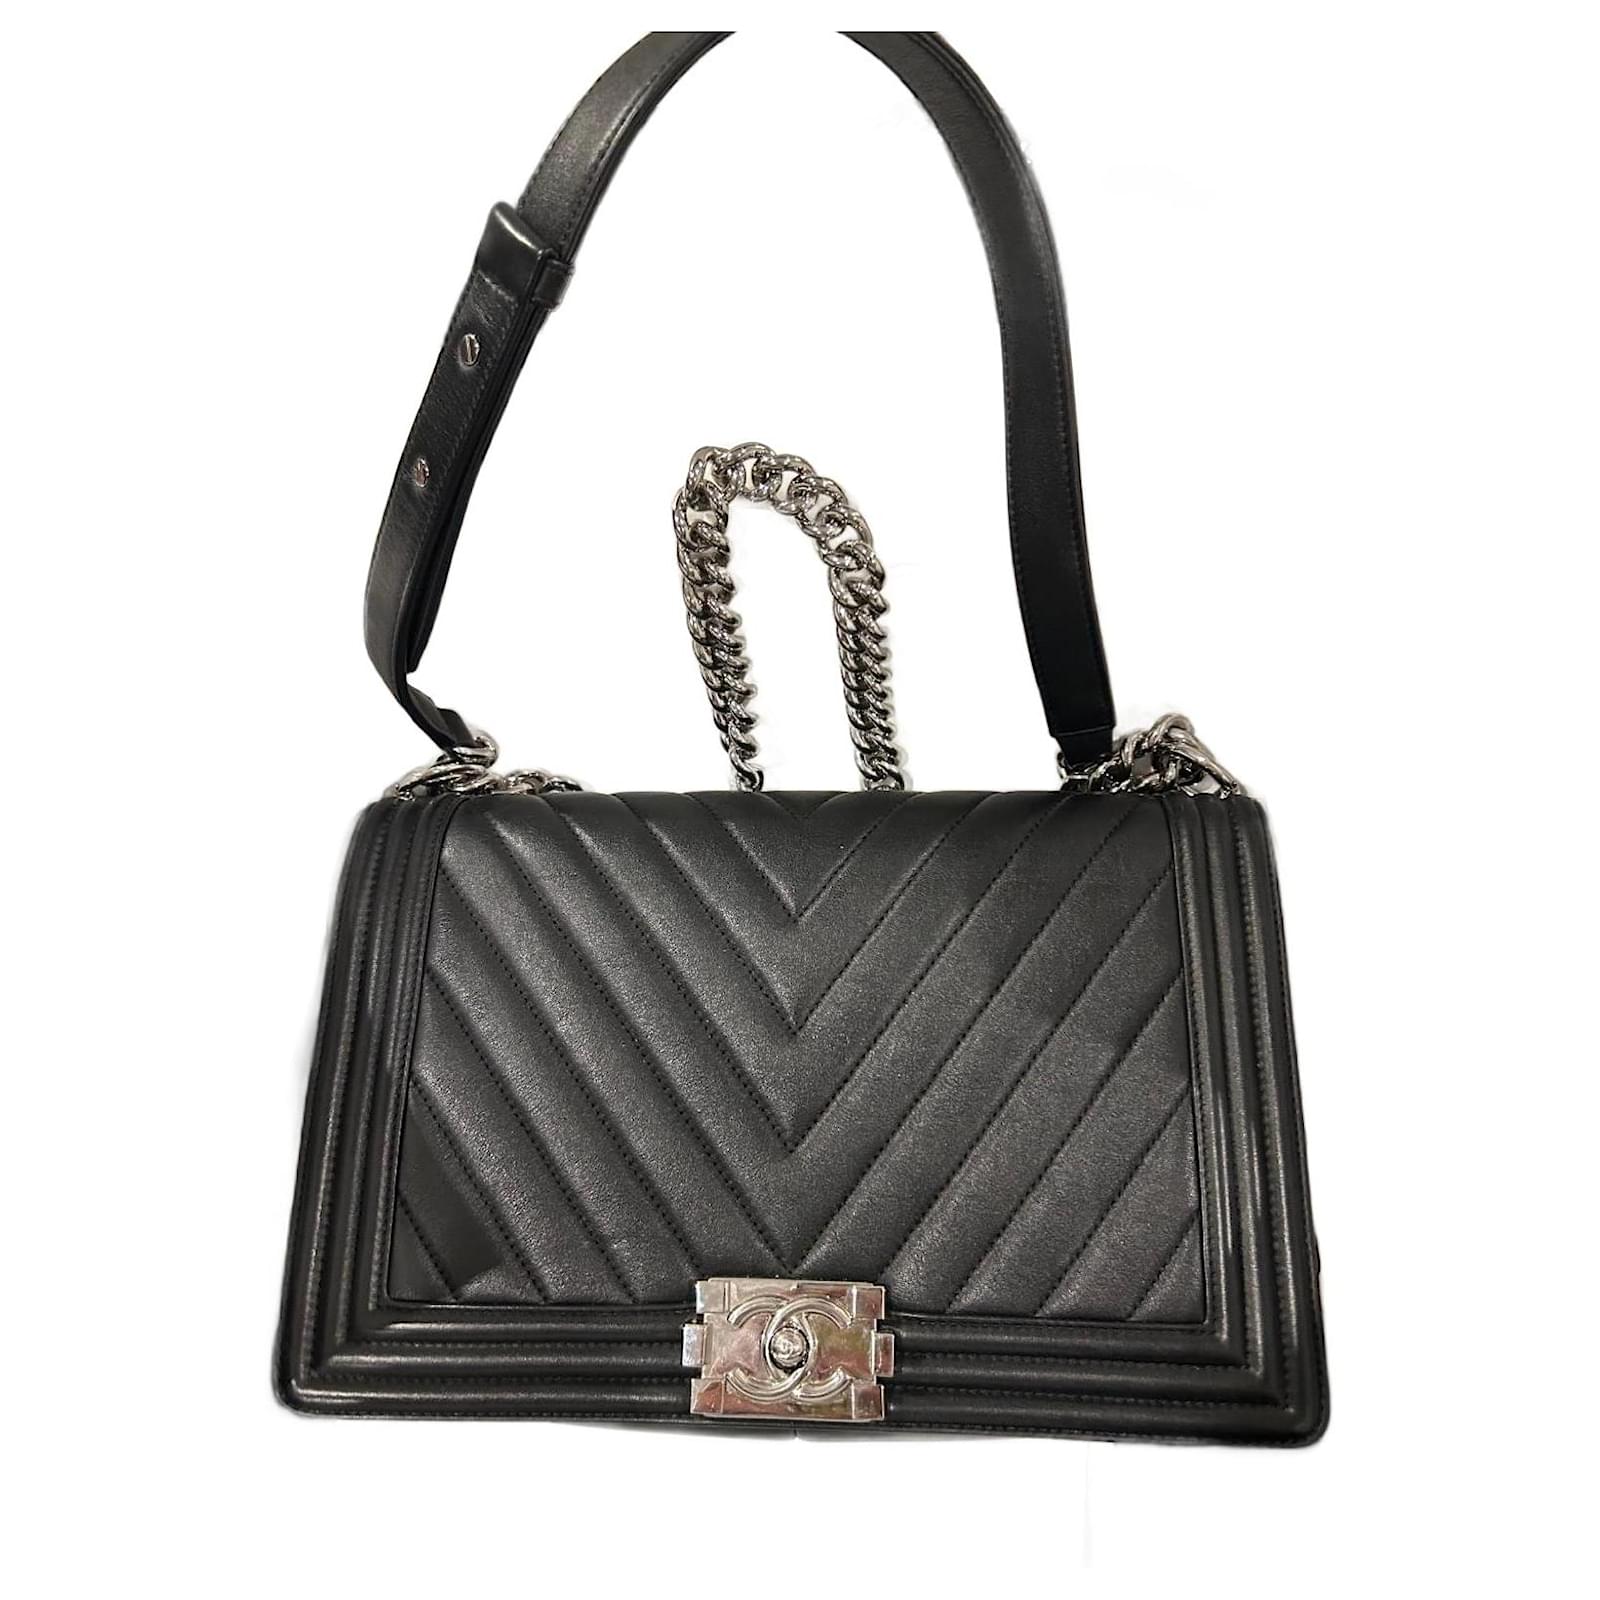 Handbags Chanel